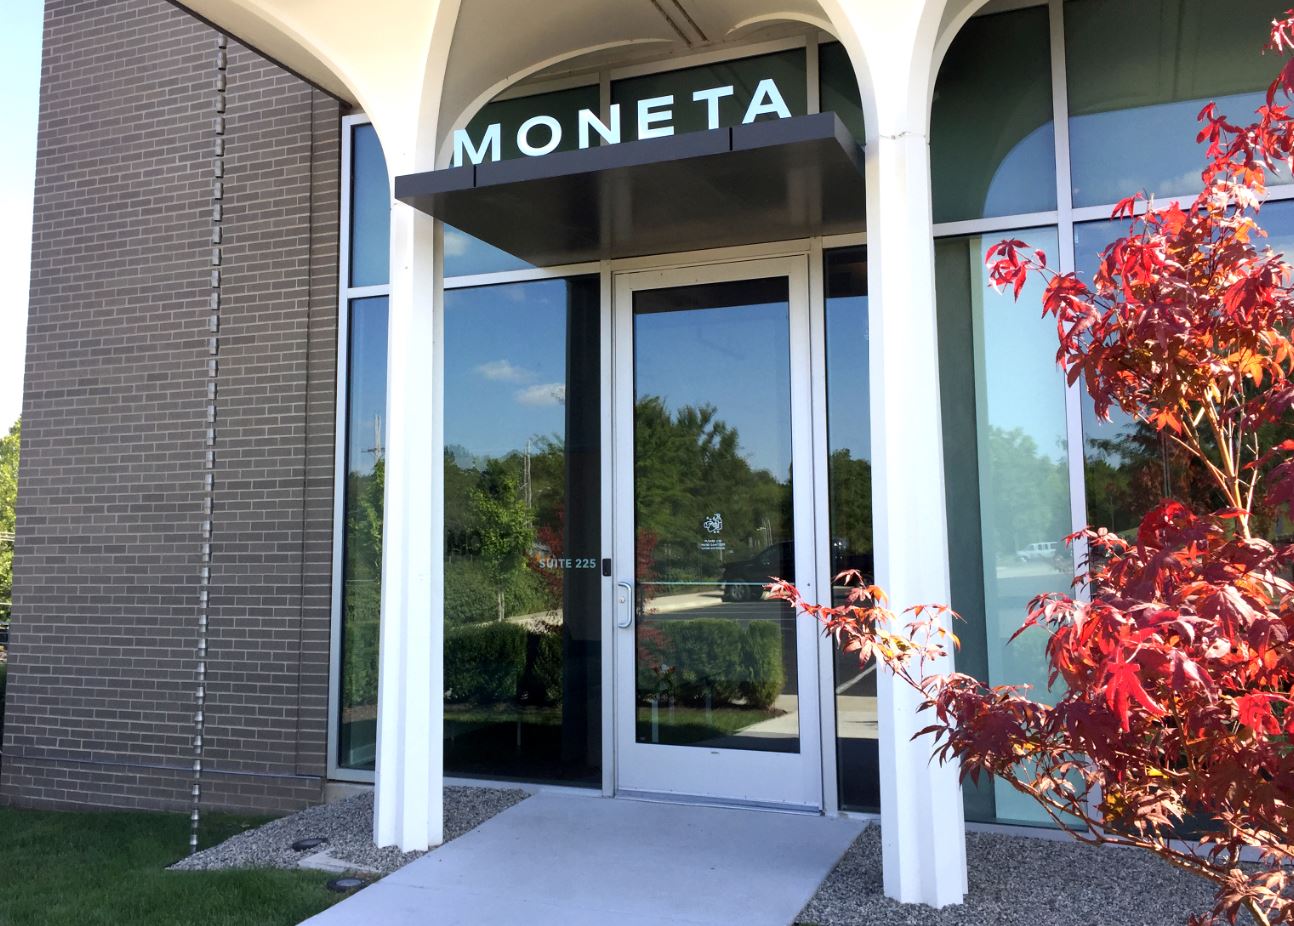 Moneta financial advisors Kansas City office